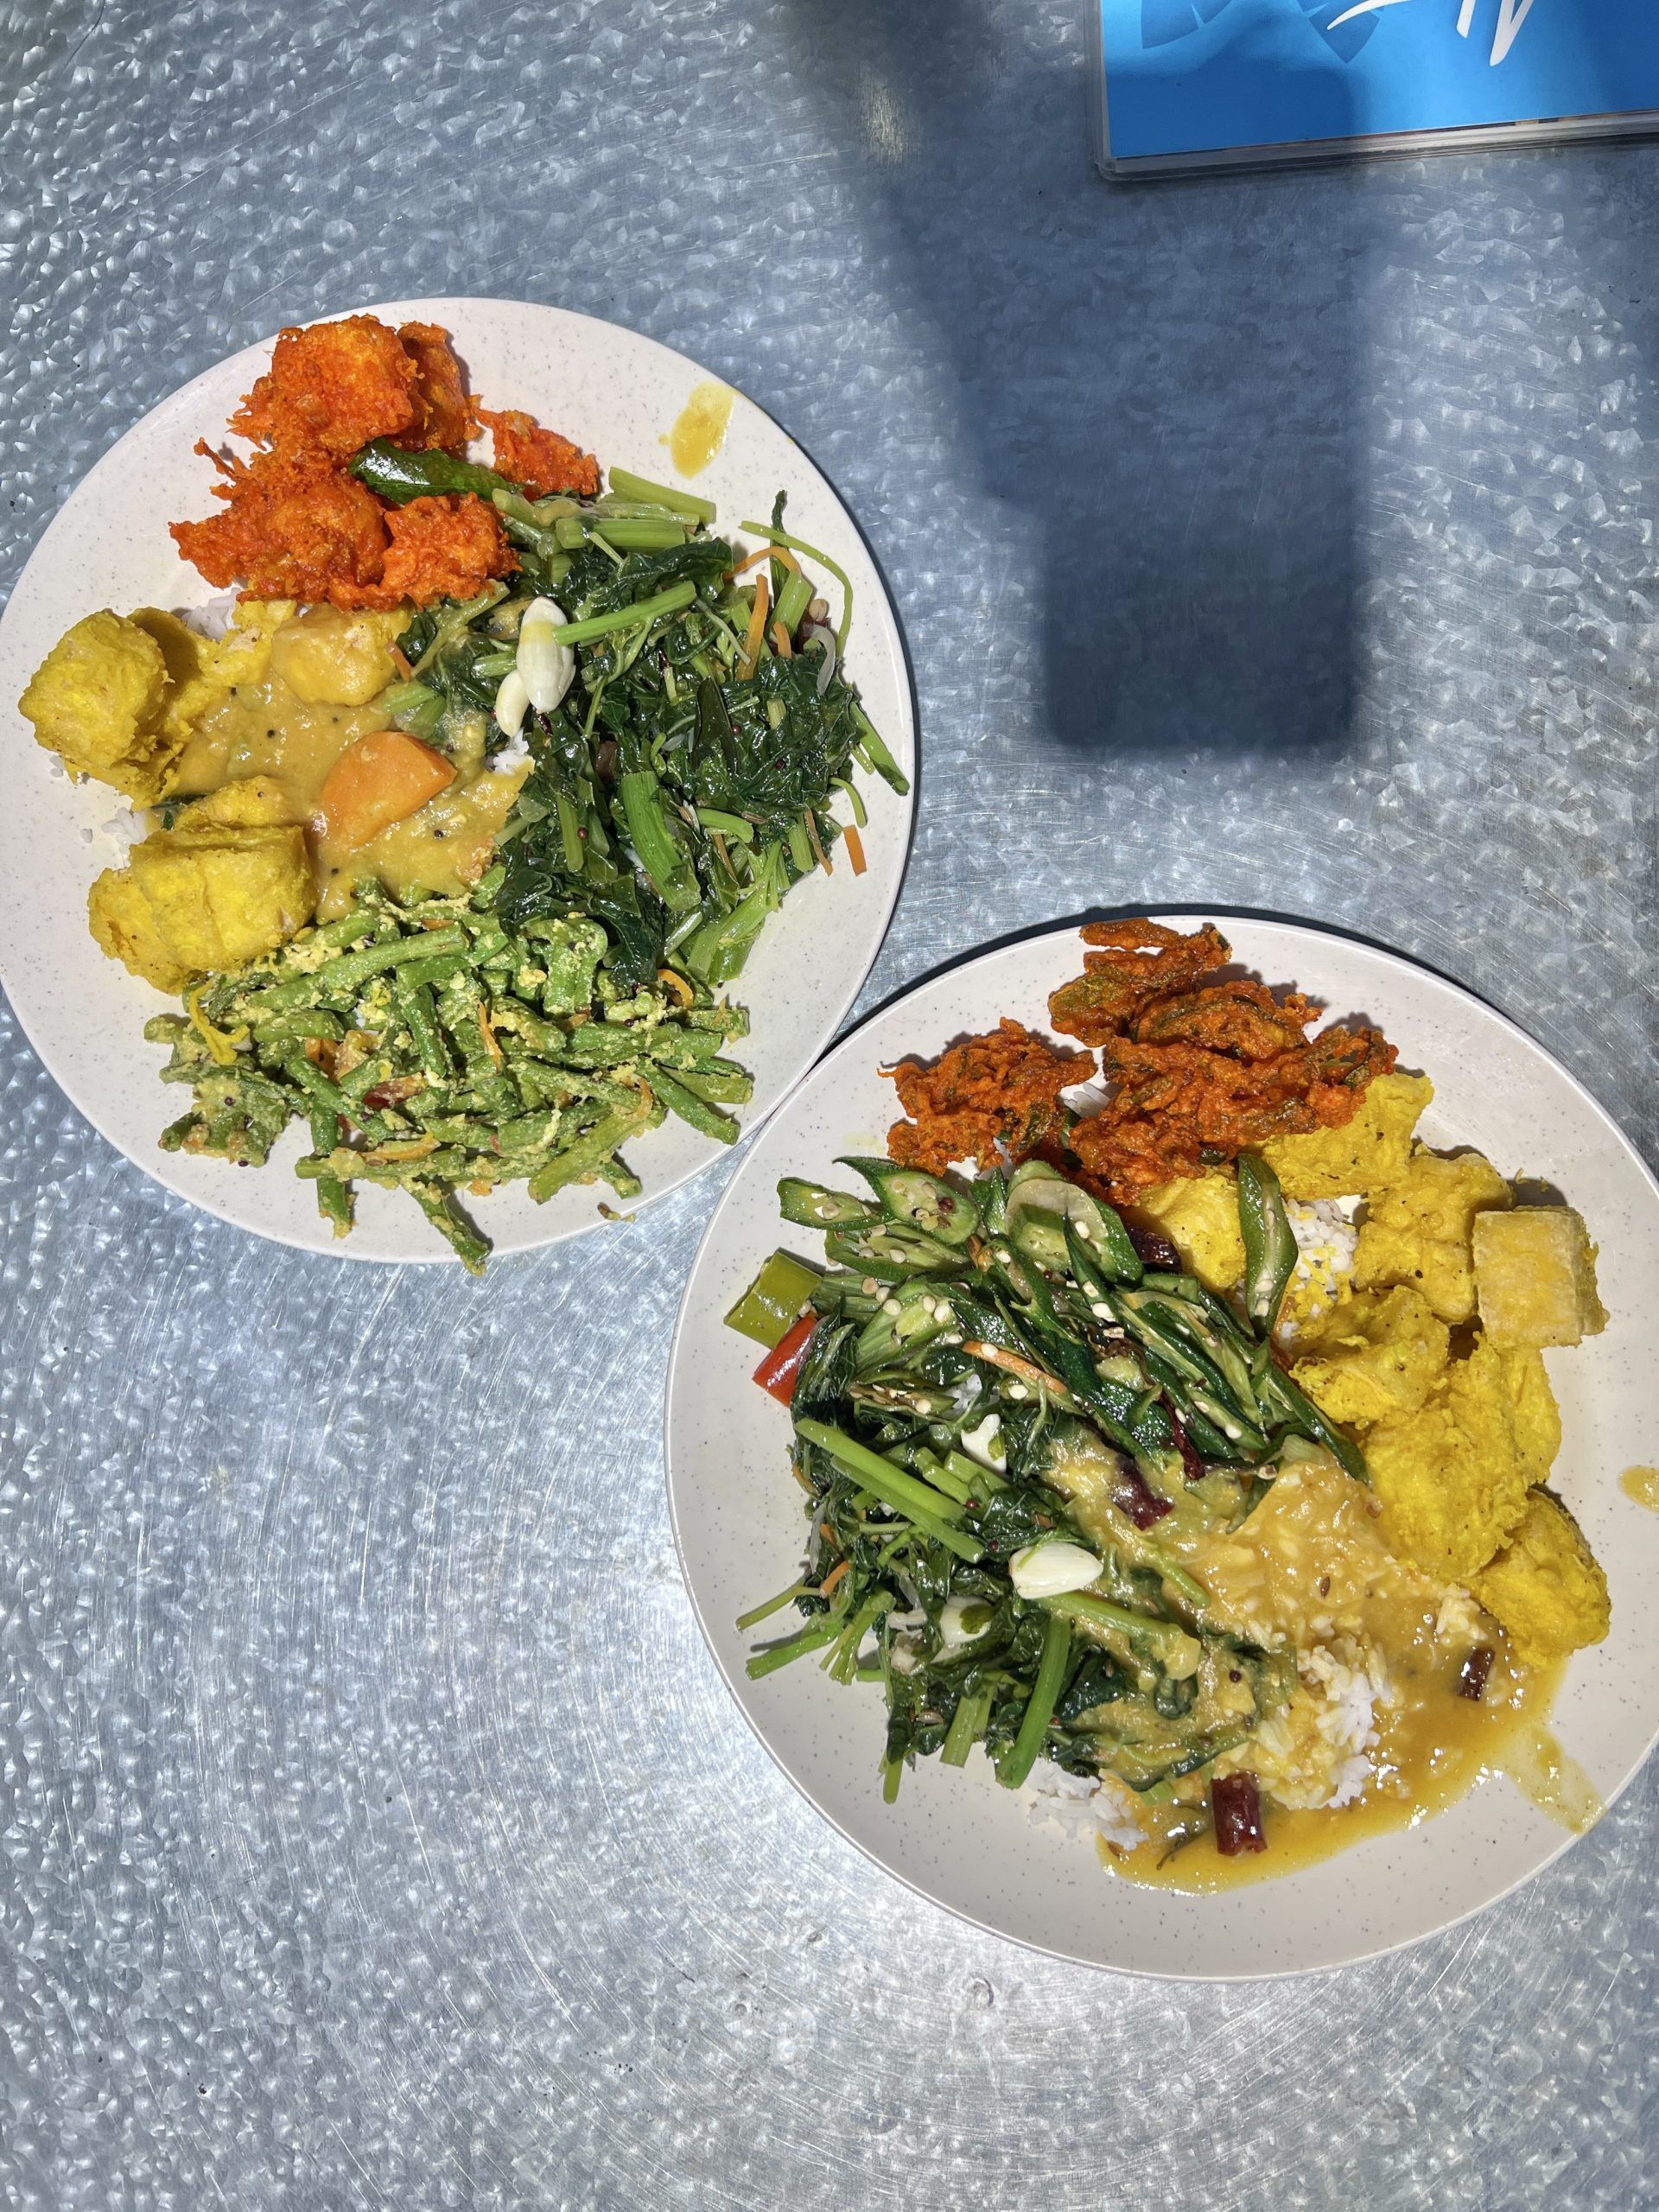 Vegan Food at Atap Nasi Kandar Jaya One, Petaling Jaya